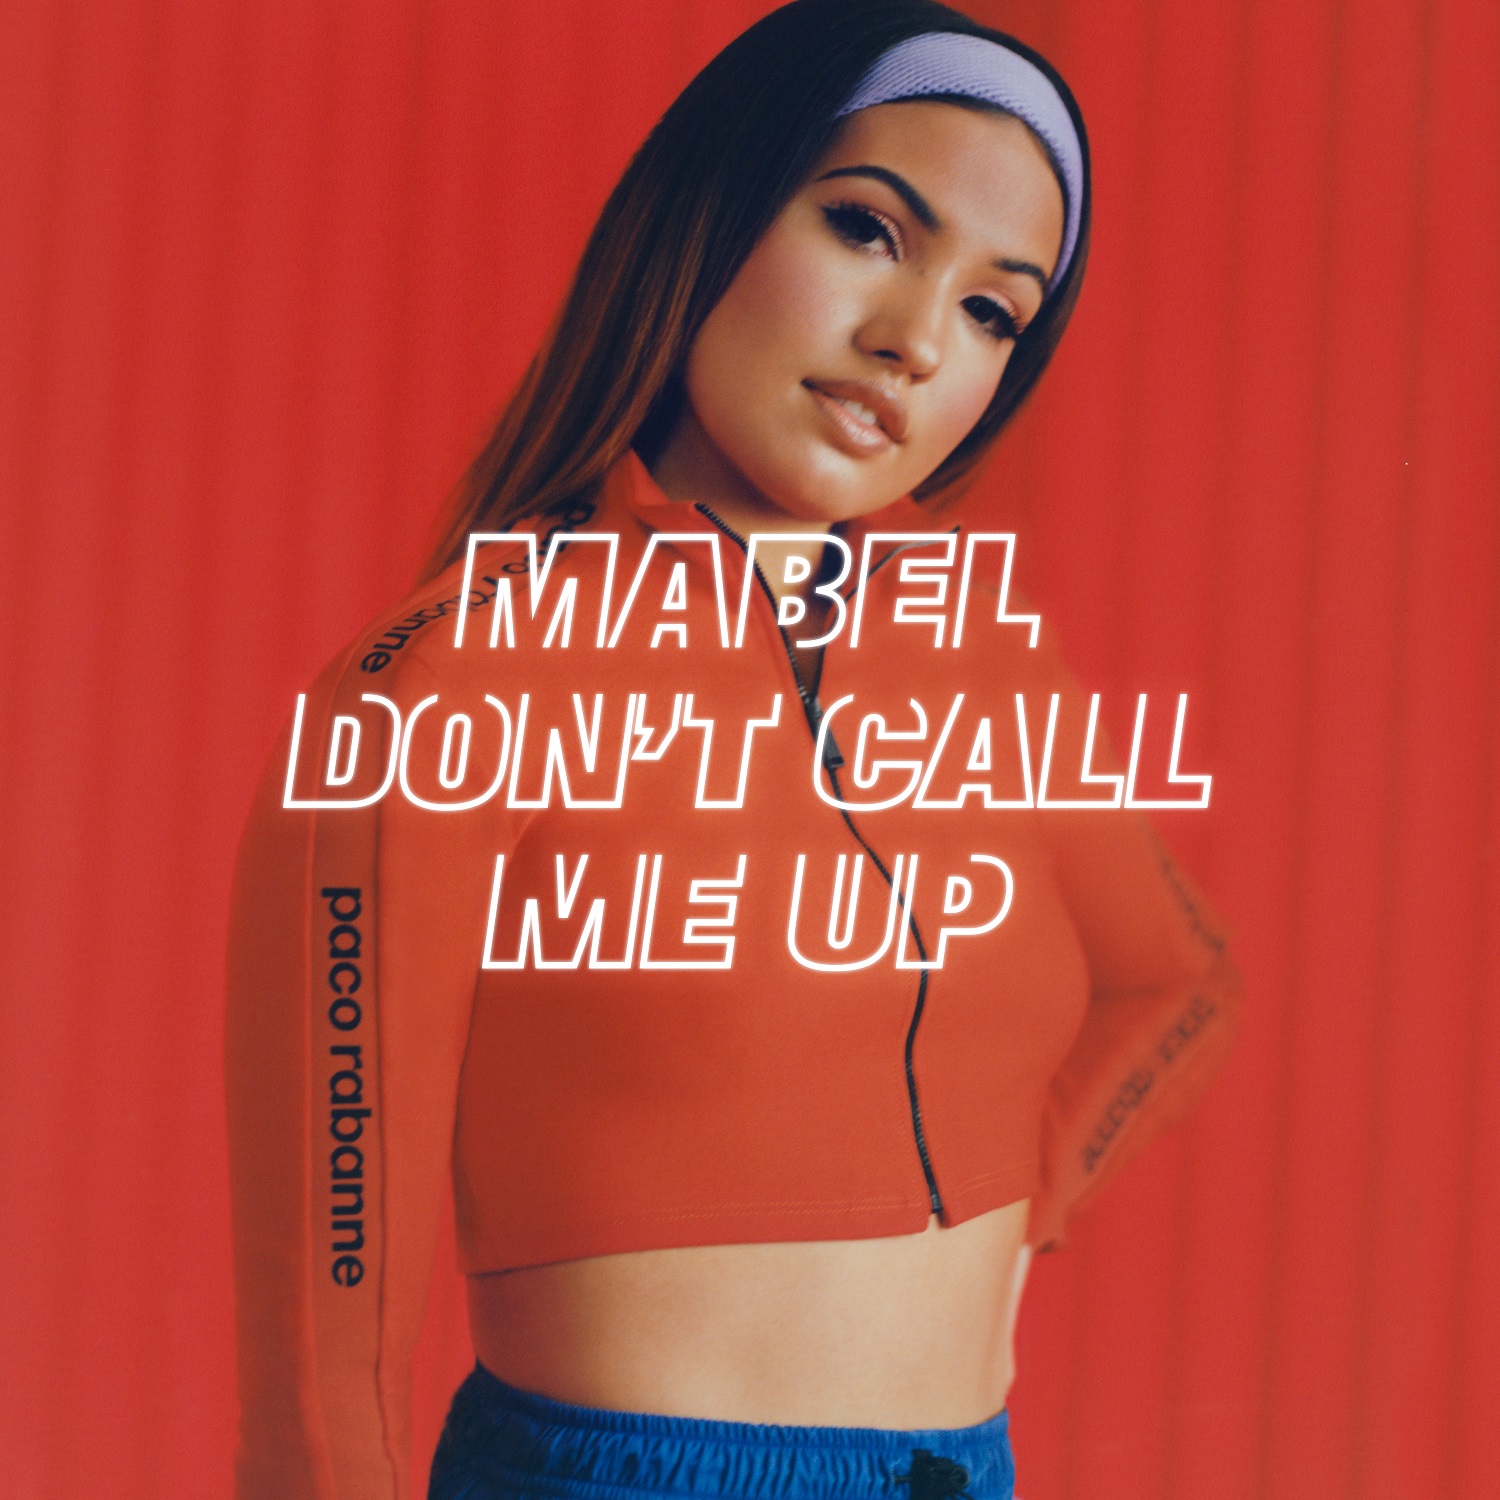 Mabel prezentuje premierowy singiel Don’t Call Me Up